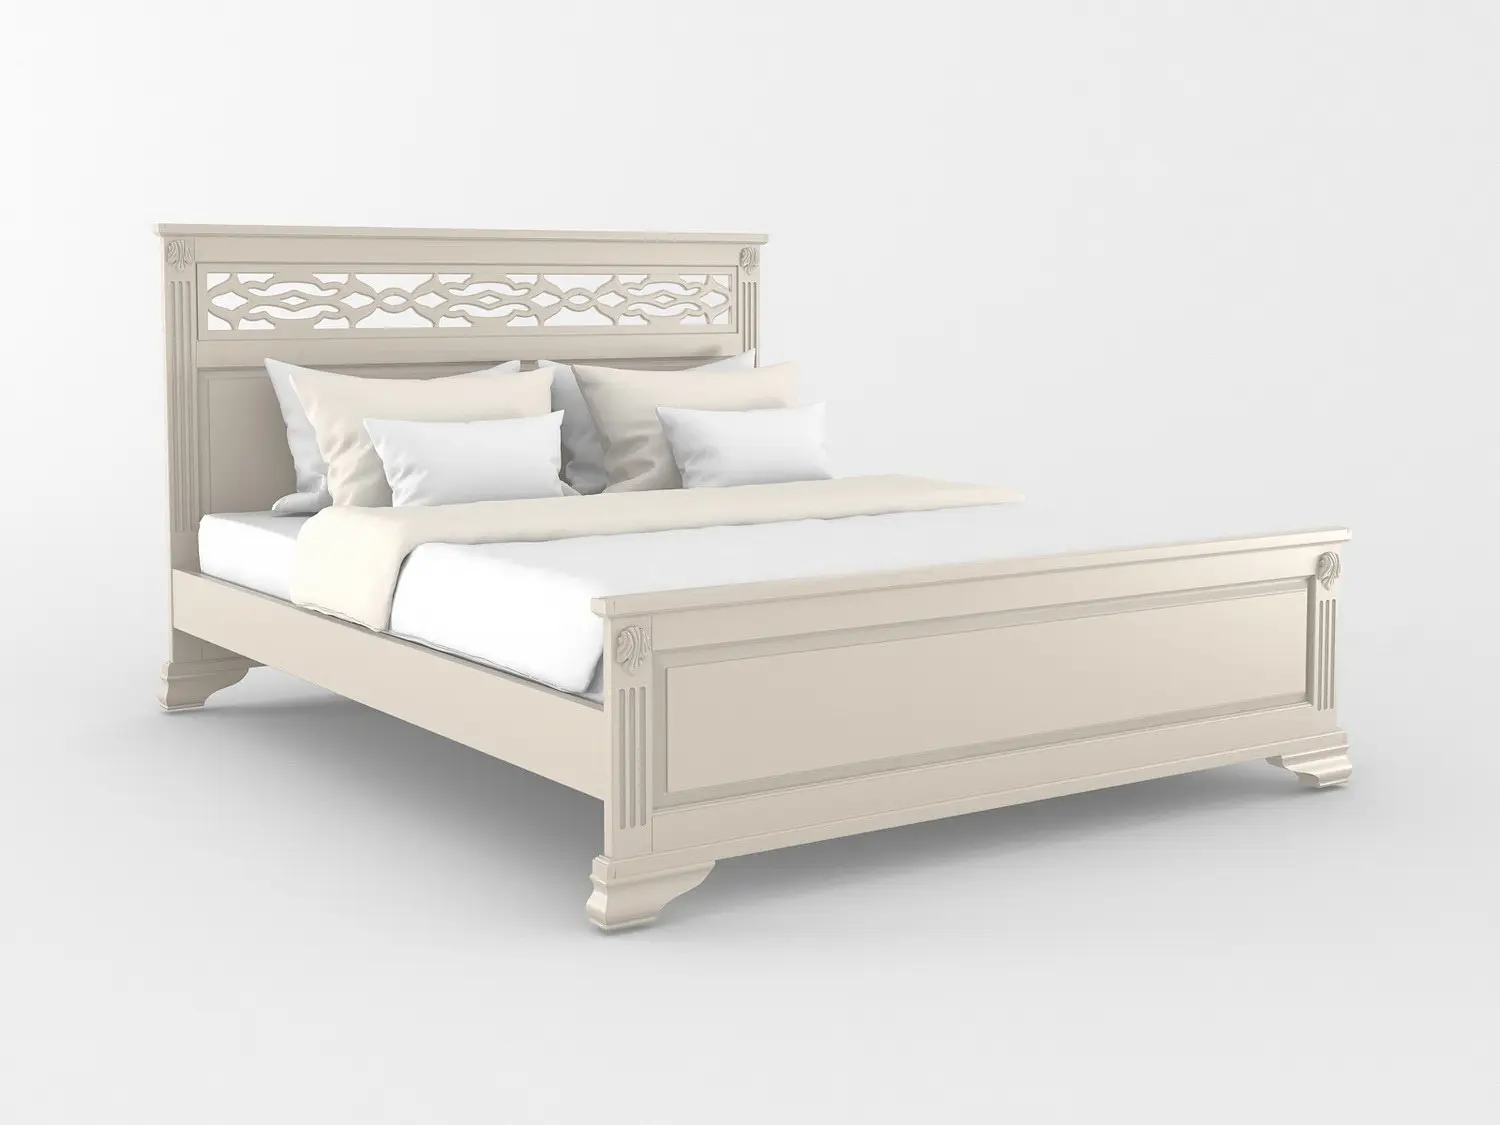 Кровать Верона 180х200